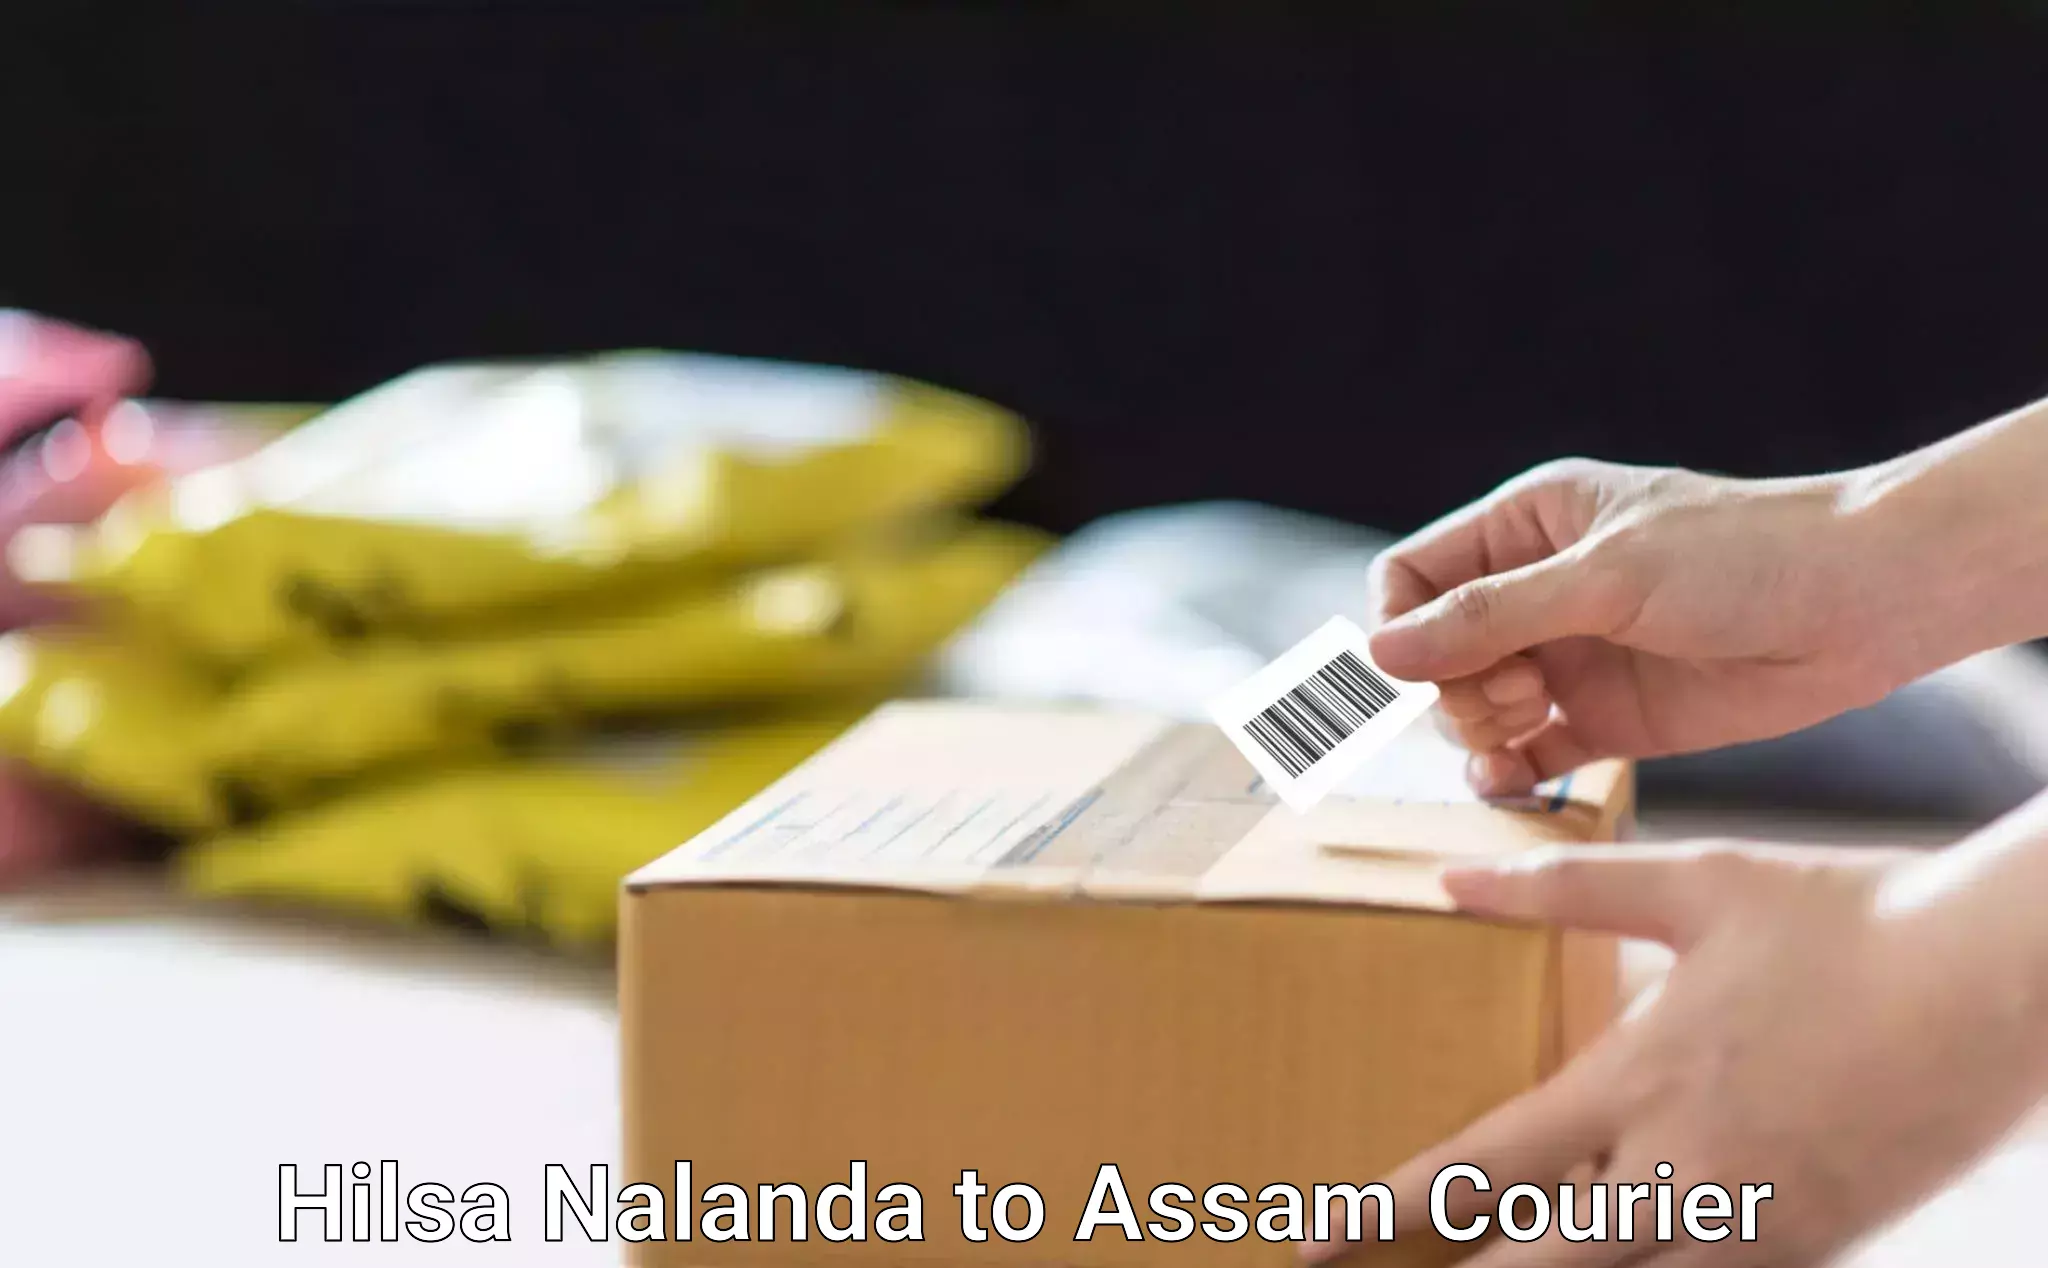 Professional packing services Hilsa Nalanda to Golakganj